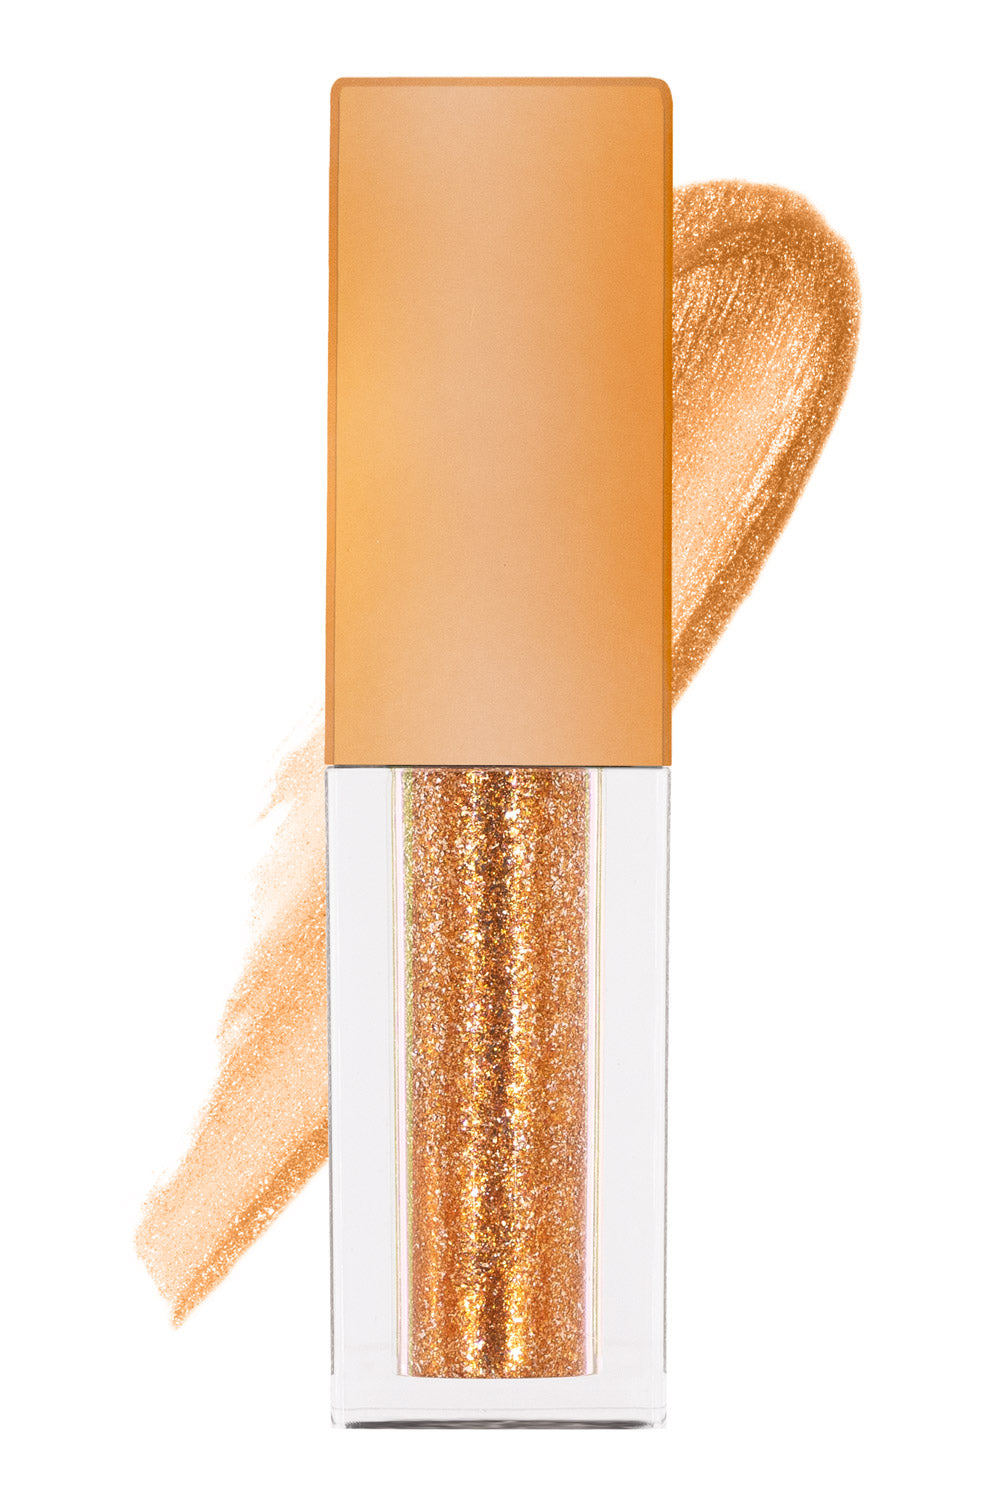 Glitter Gold 11 - Type 1 Liquid Eyeshadow